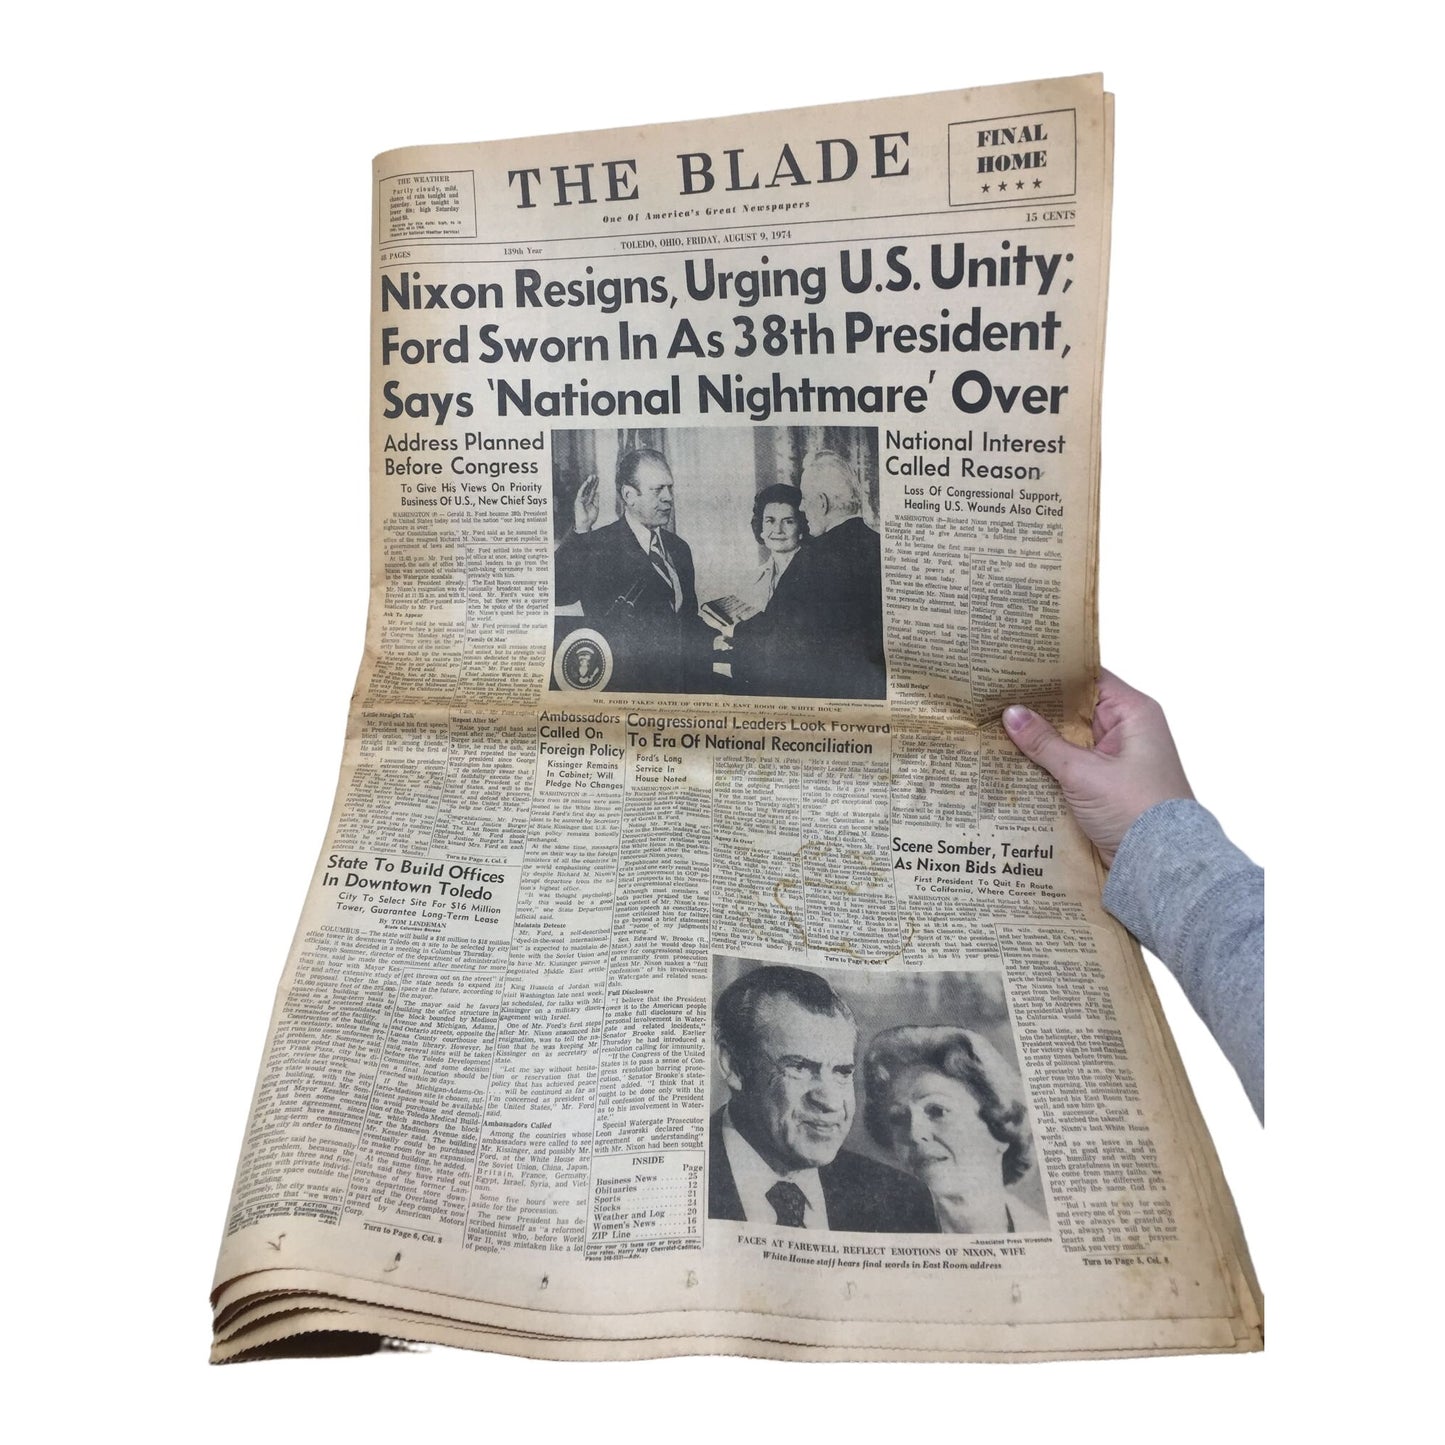 Vintage The Blade Newspaper Aug 9, 1974 "Nixon Resigns, Urging U.S. Unity; Ford Sworn in as 38th President"